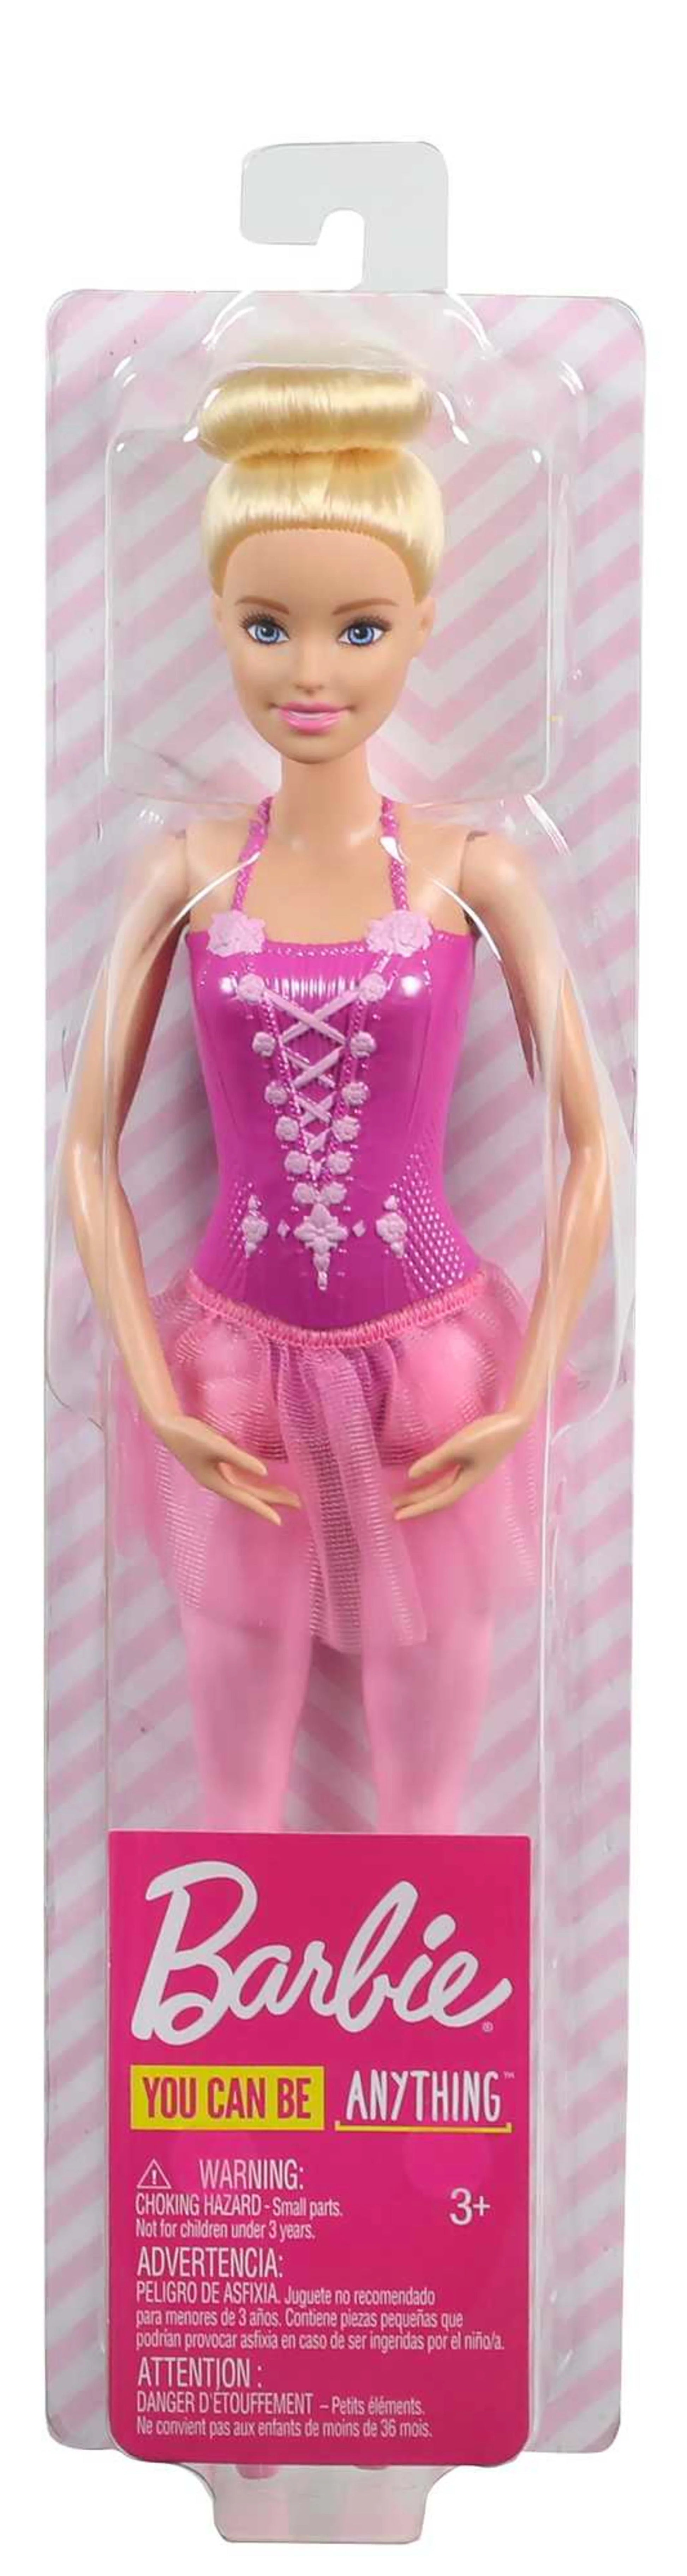 Barbie Bailarina – germanionline